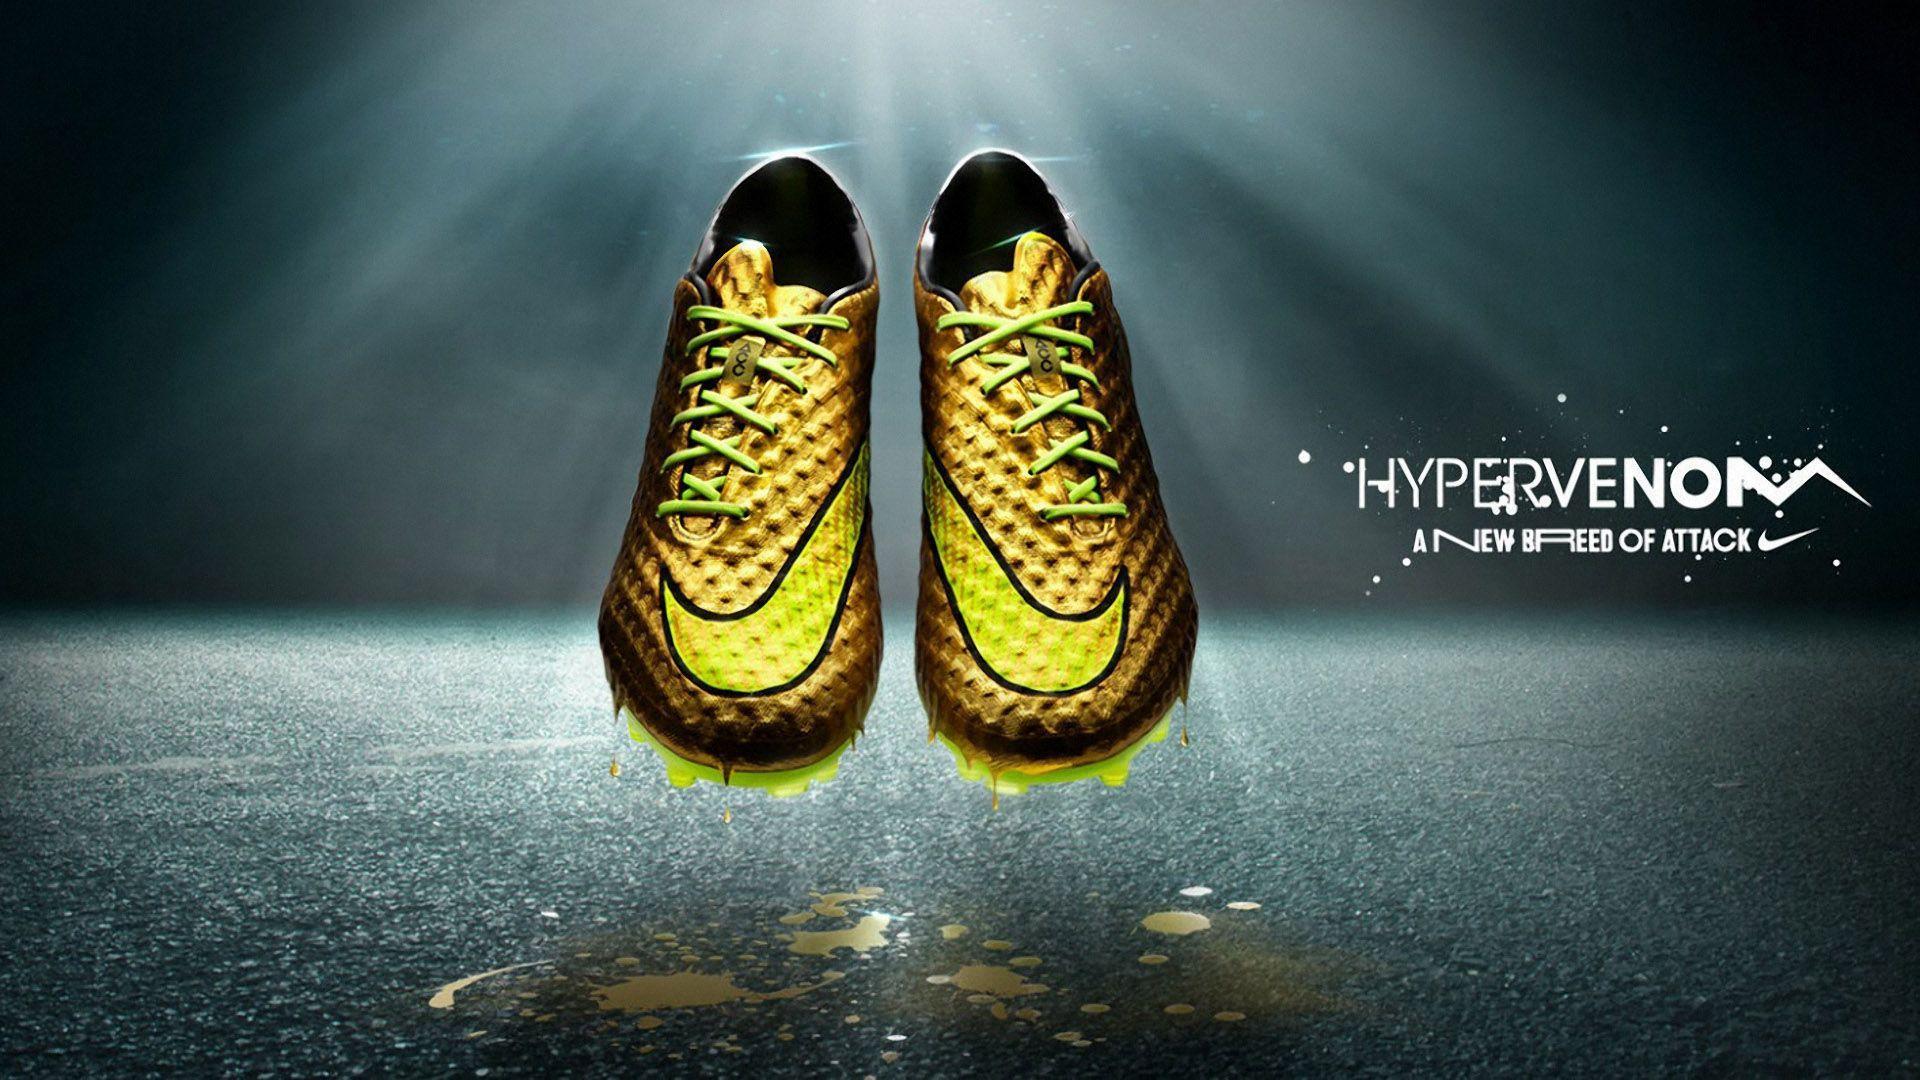 Neymar Nike Hypervenom Gold 2014 World Cup Boot Wallpaper Wide or